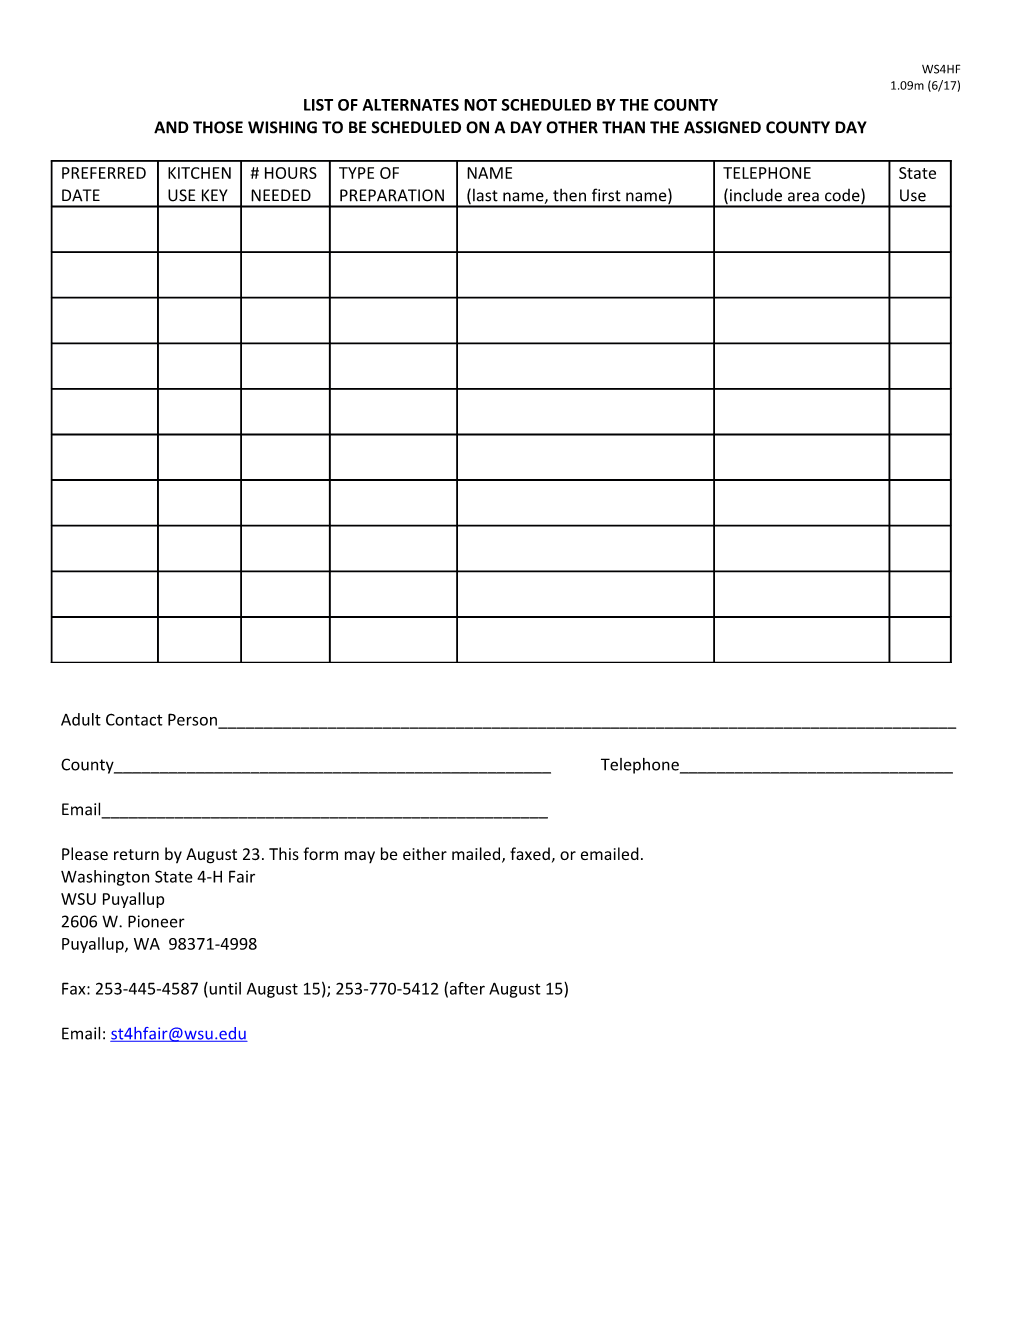 Kitchen Activity Report Form - 2017